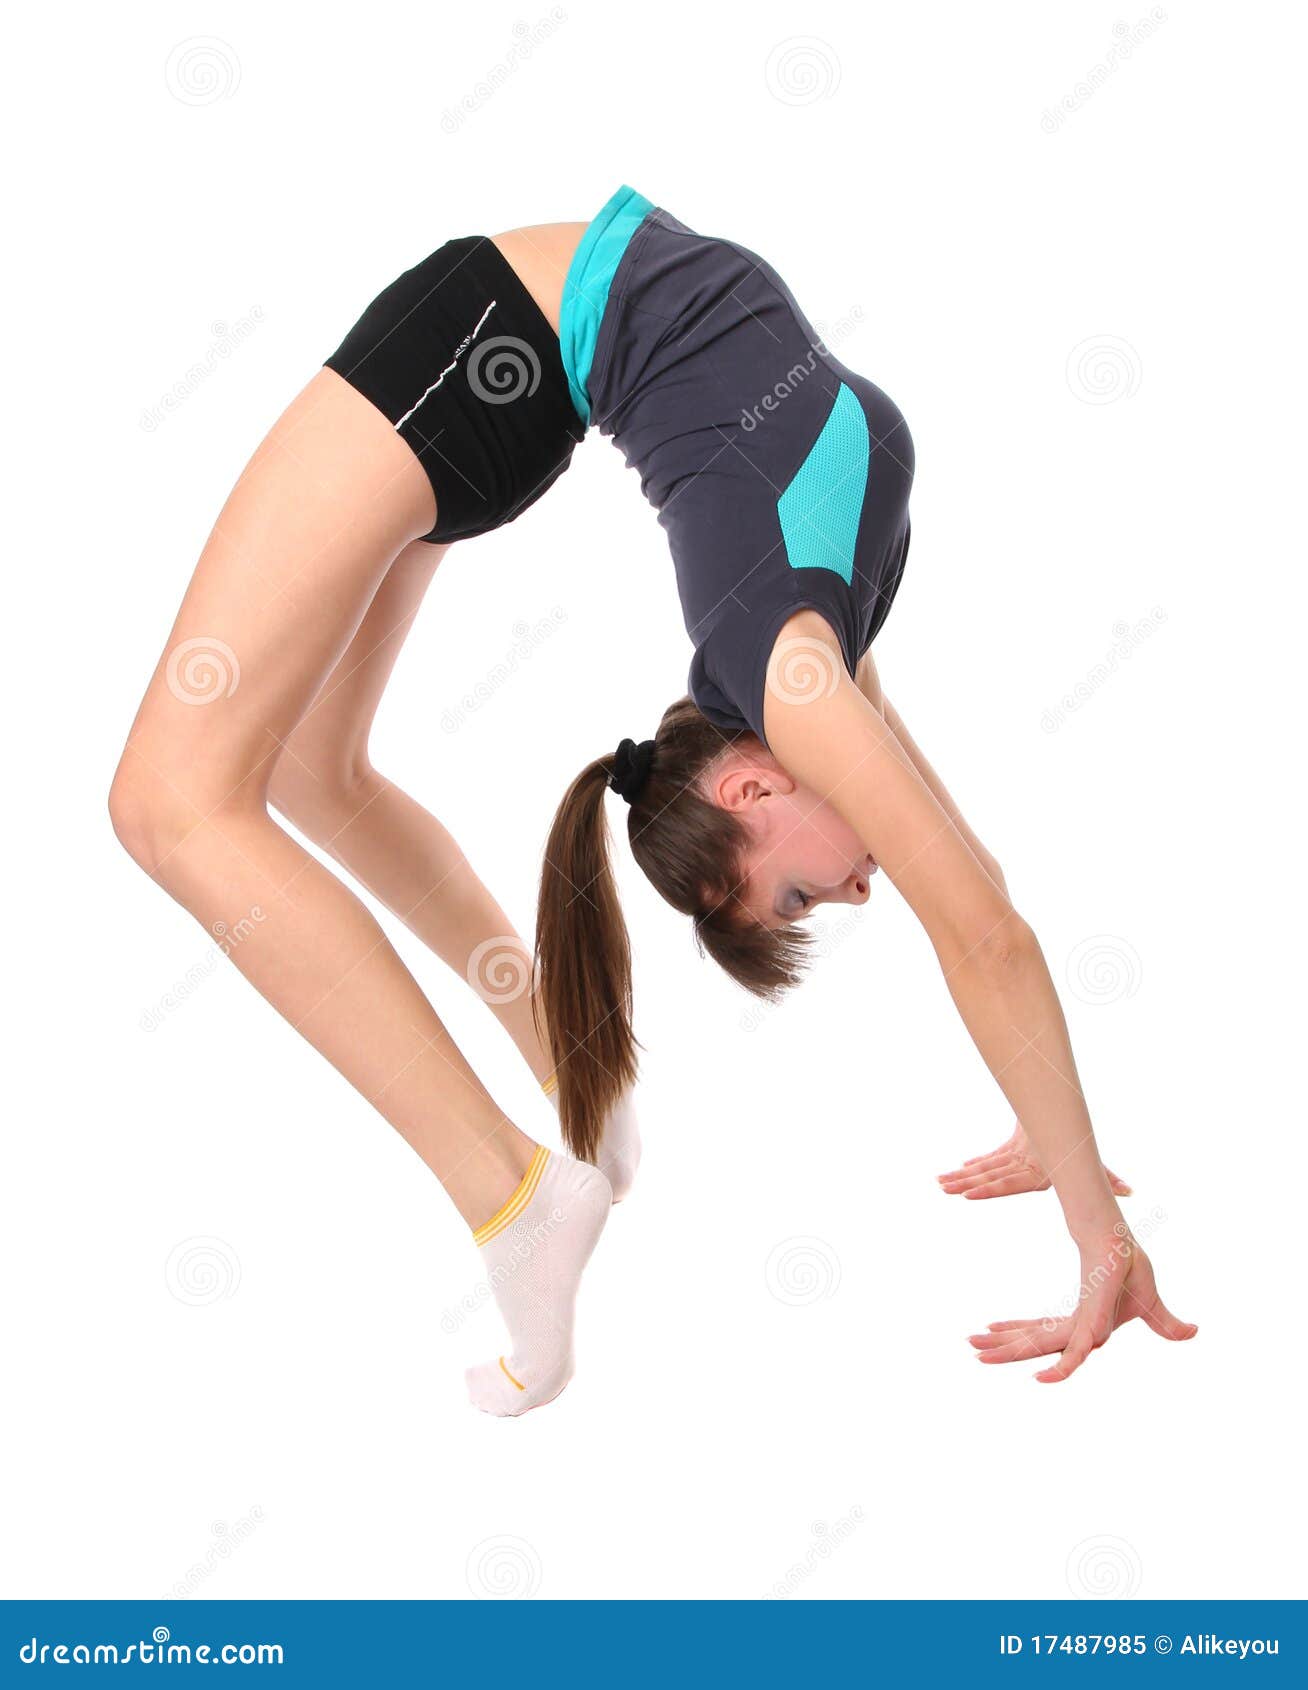 Gymnastic poses vinyl wall art stickers set of 6 home sport girl bedroom  decals | eBay